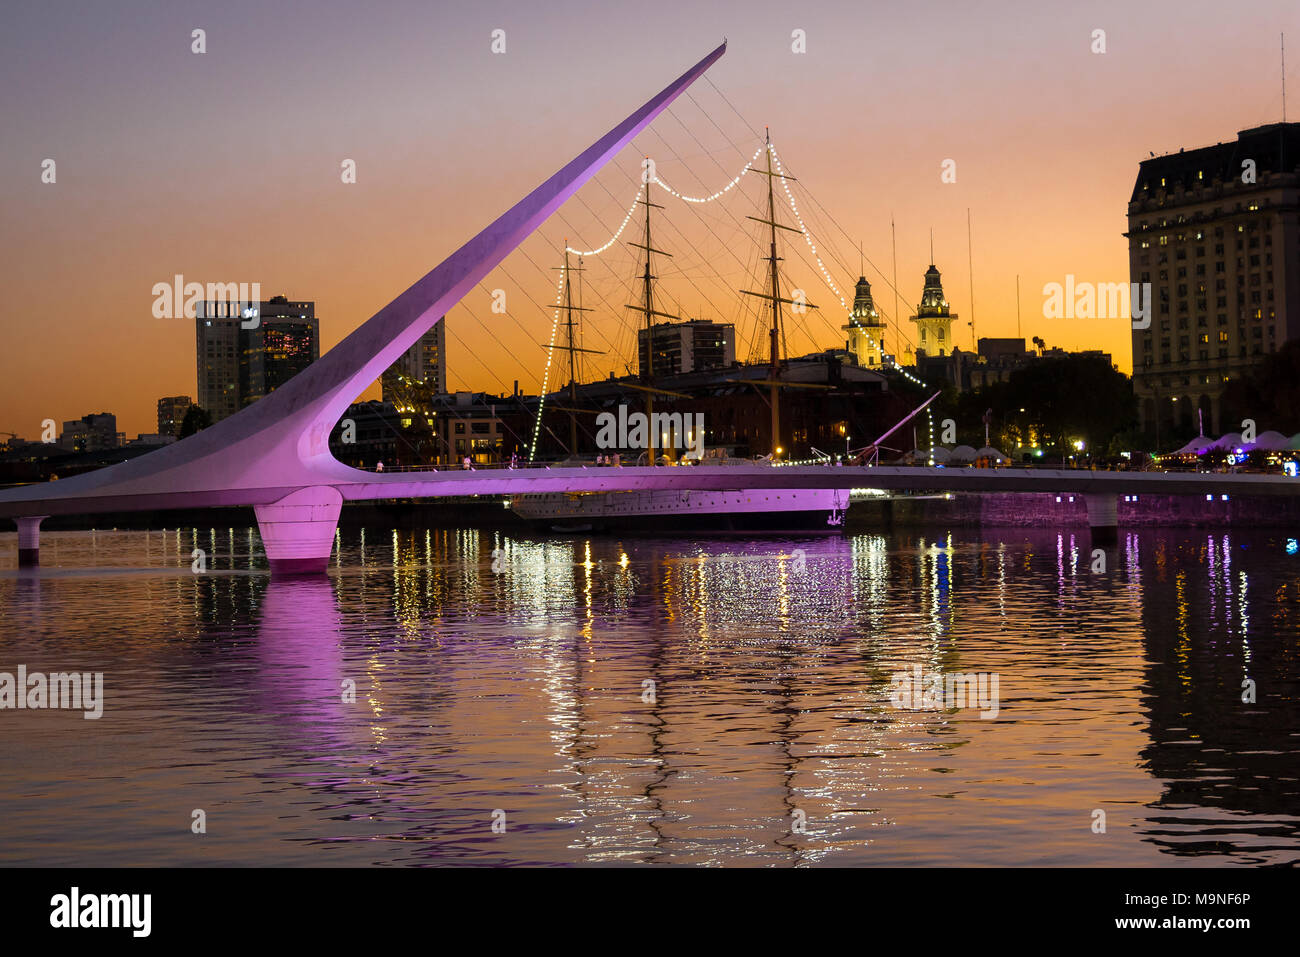 Puerto Madero Bezirk, Puente de La Mujer (Brücke der Frau) von Architekt Santiago Calatrava, Buenos Aires, Argentinien Stockfoto